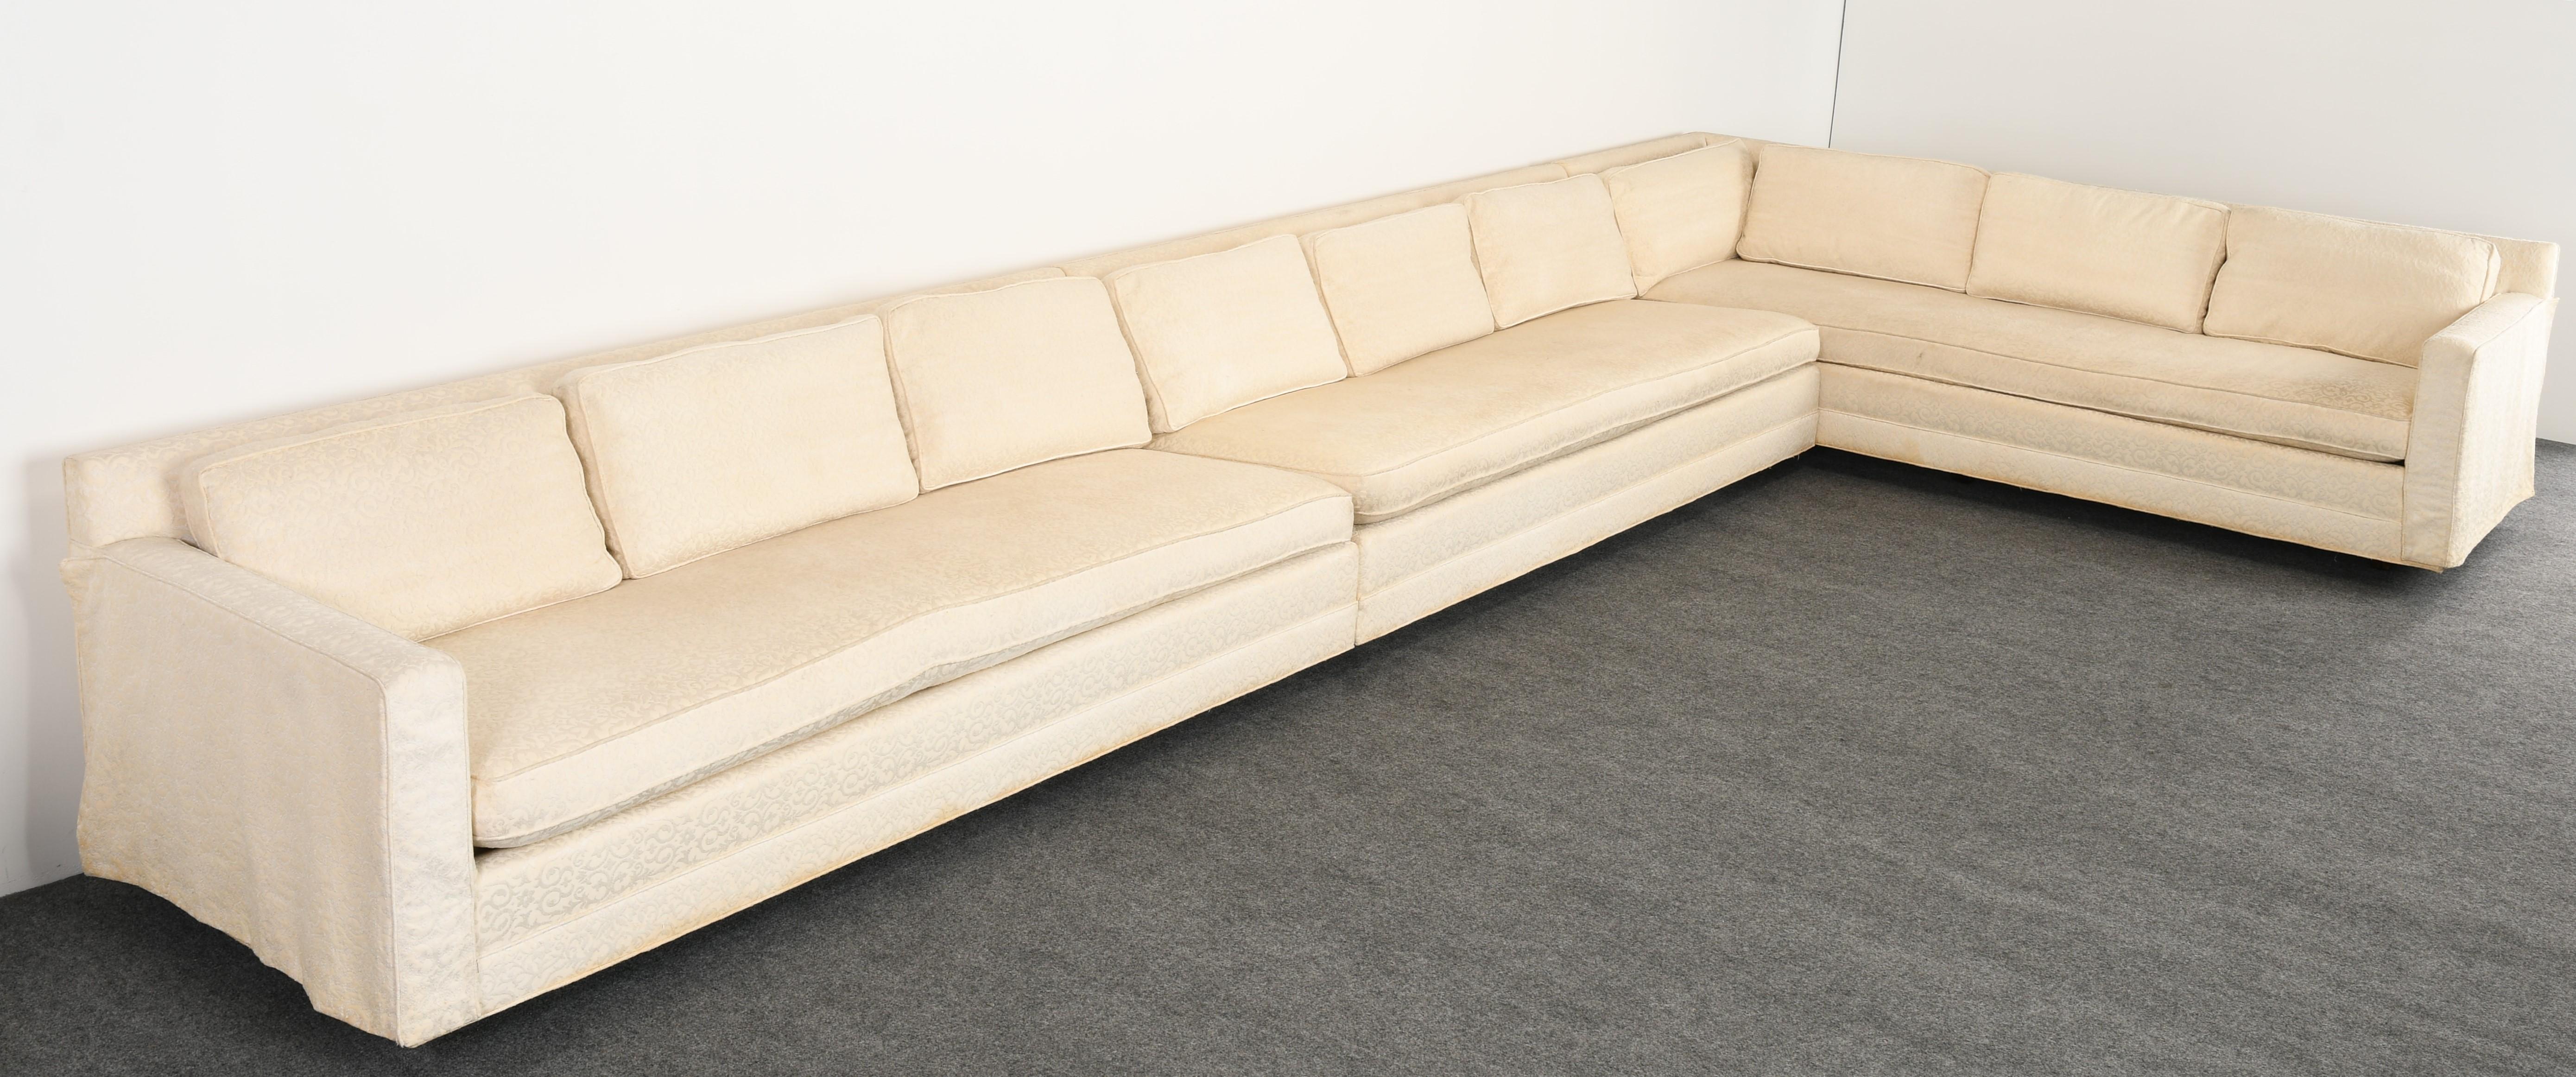 custom modern sectional sofa